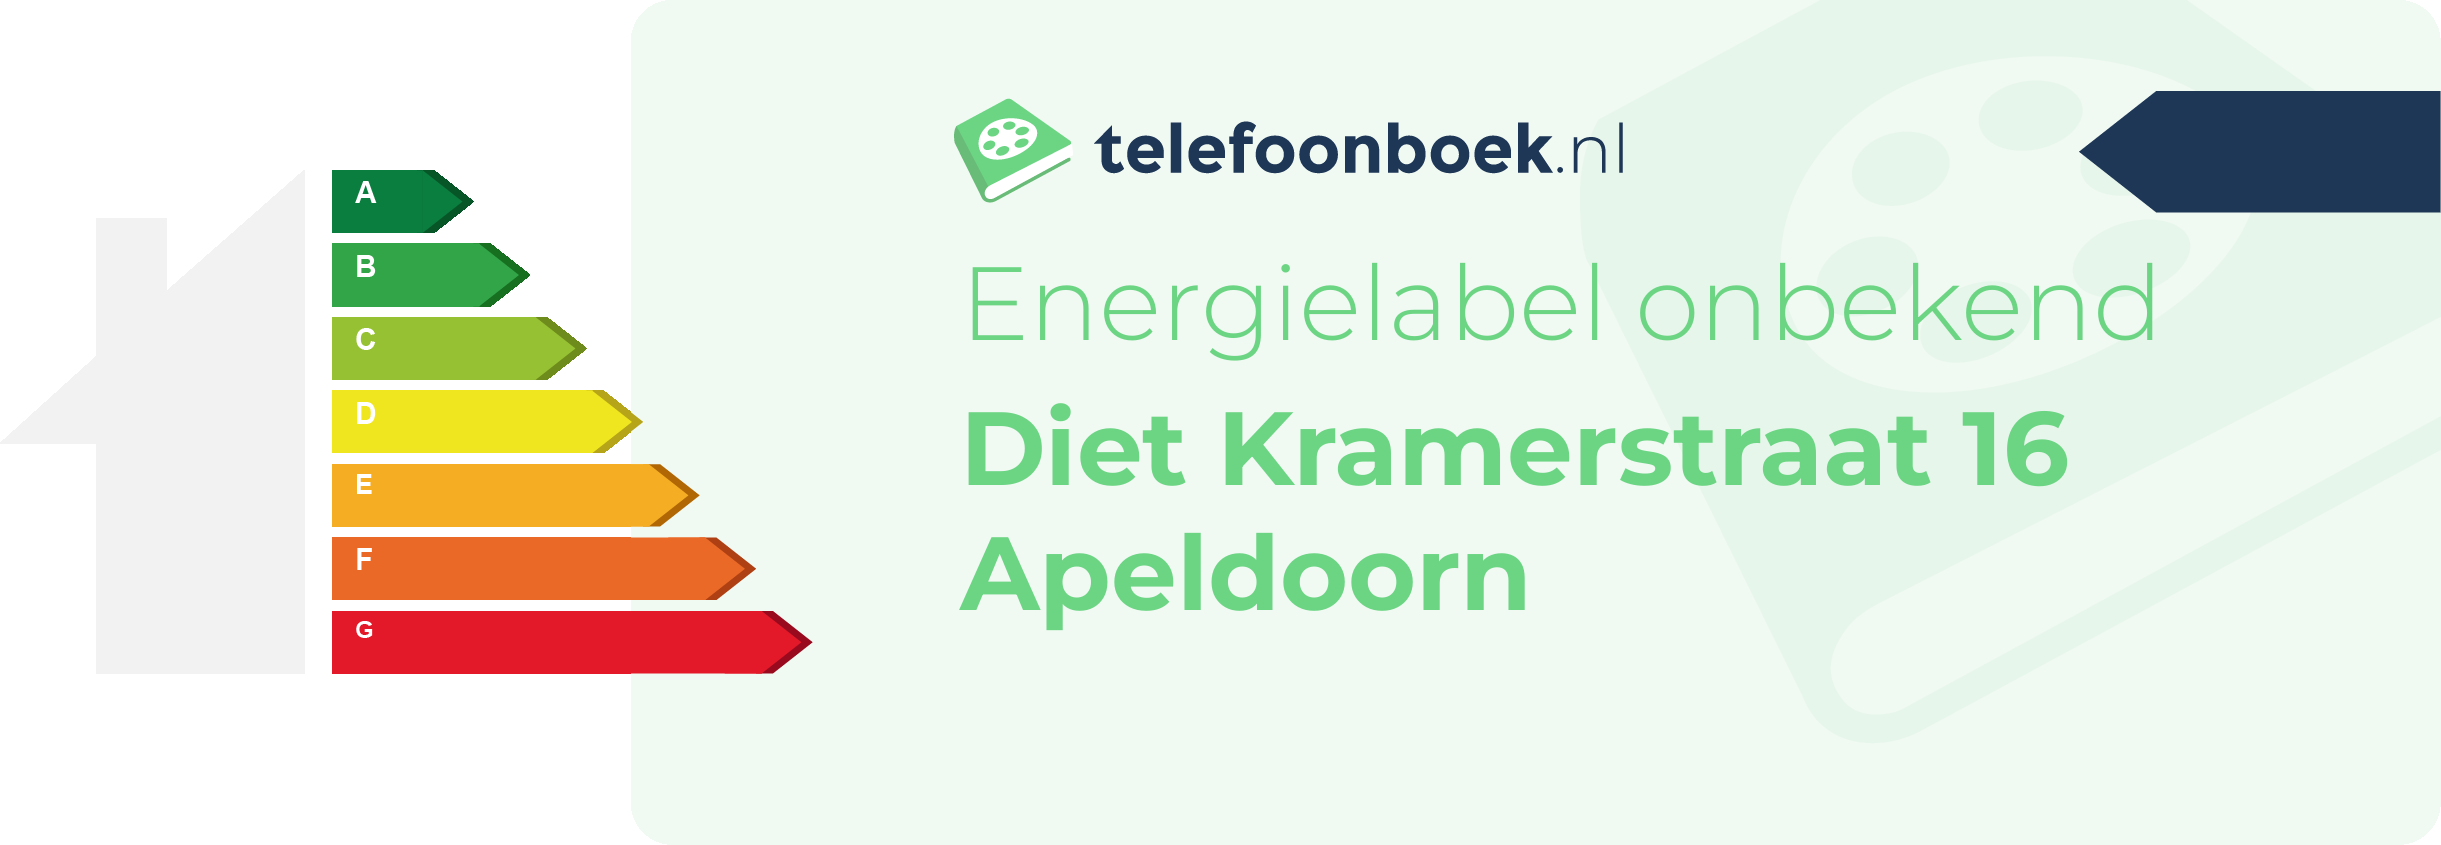 Energielabel Diet Kramerstraat 16 Apeldoorn